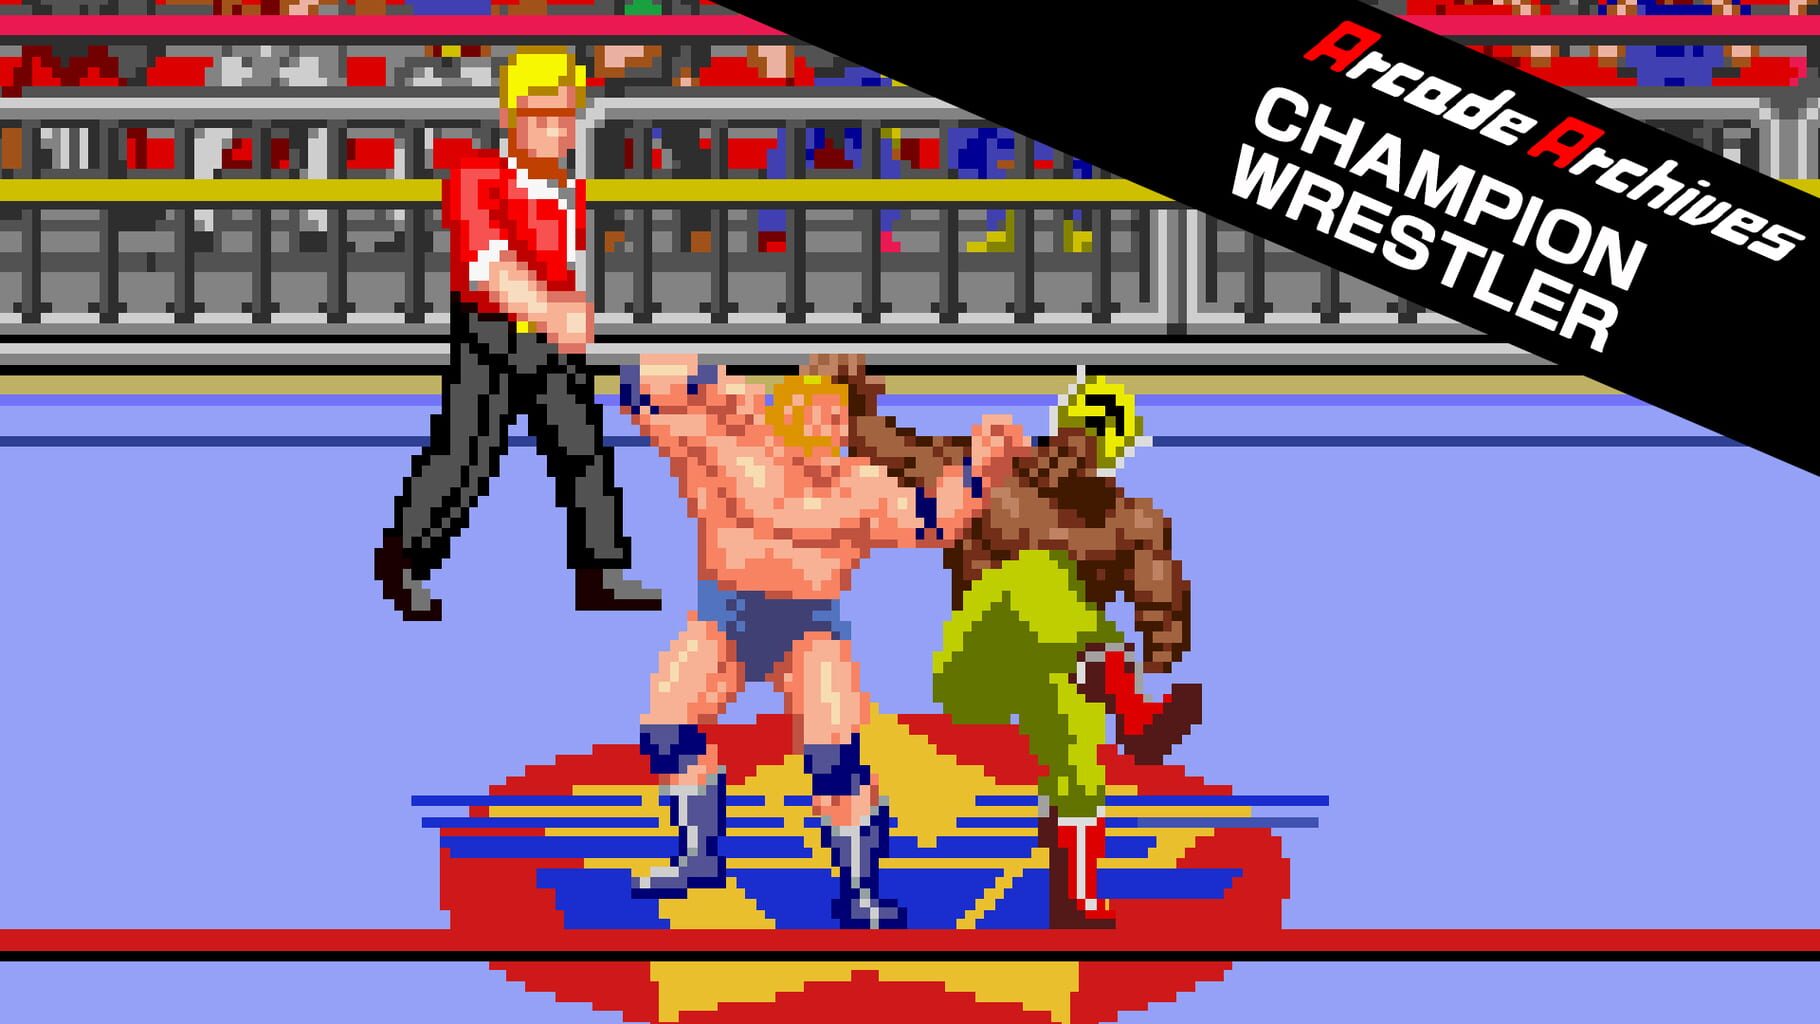 Arcade Archives: Champion Wrestler artwork